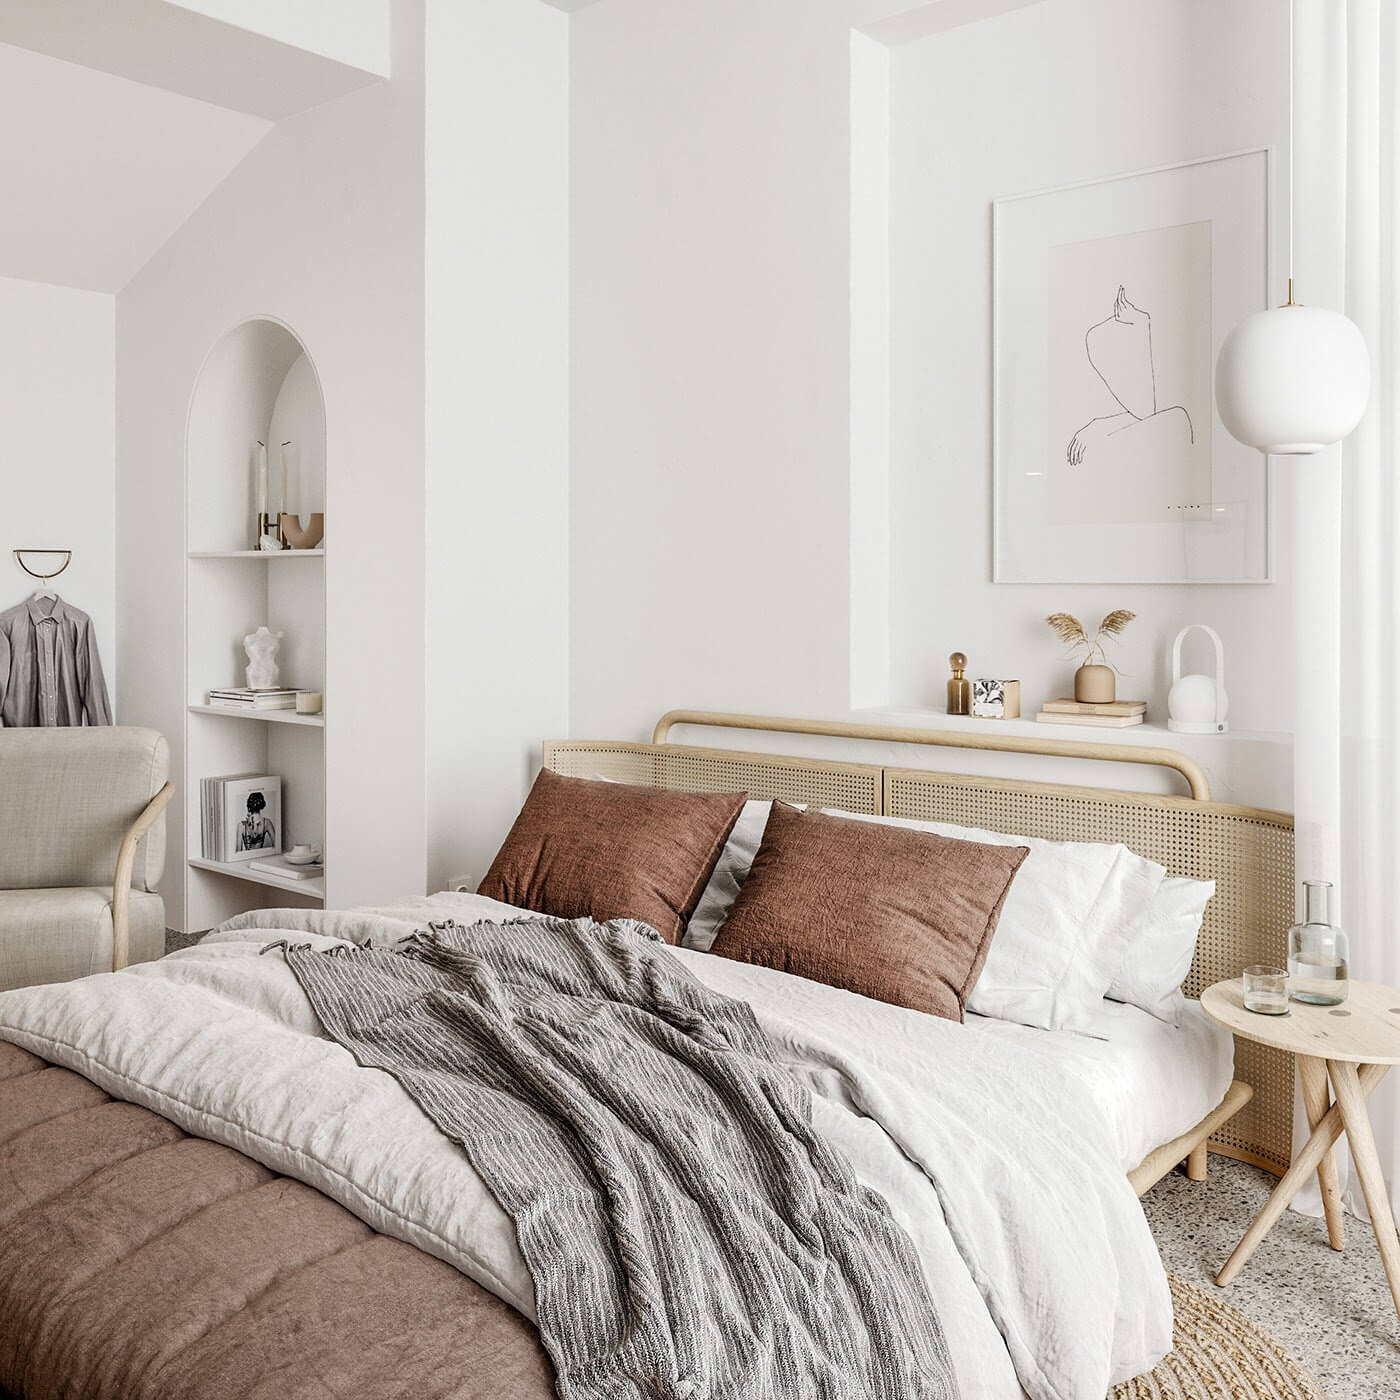 Pale stylish apartment bedroom design - cgi visualization